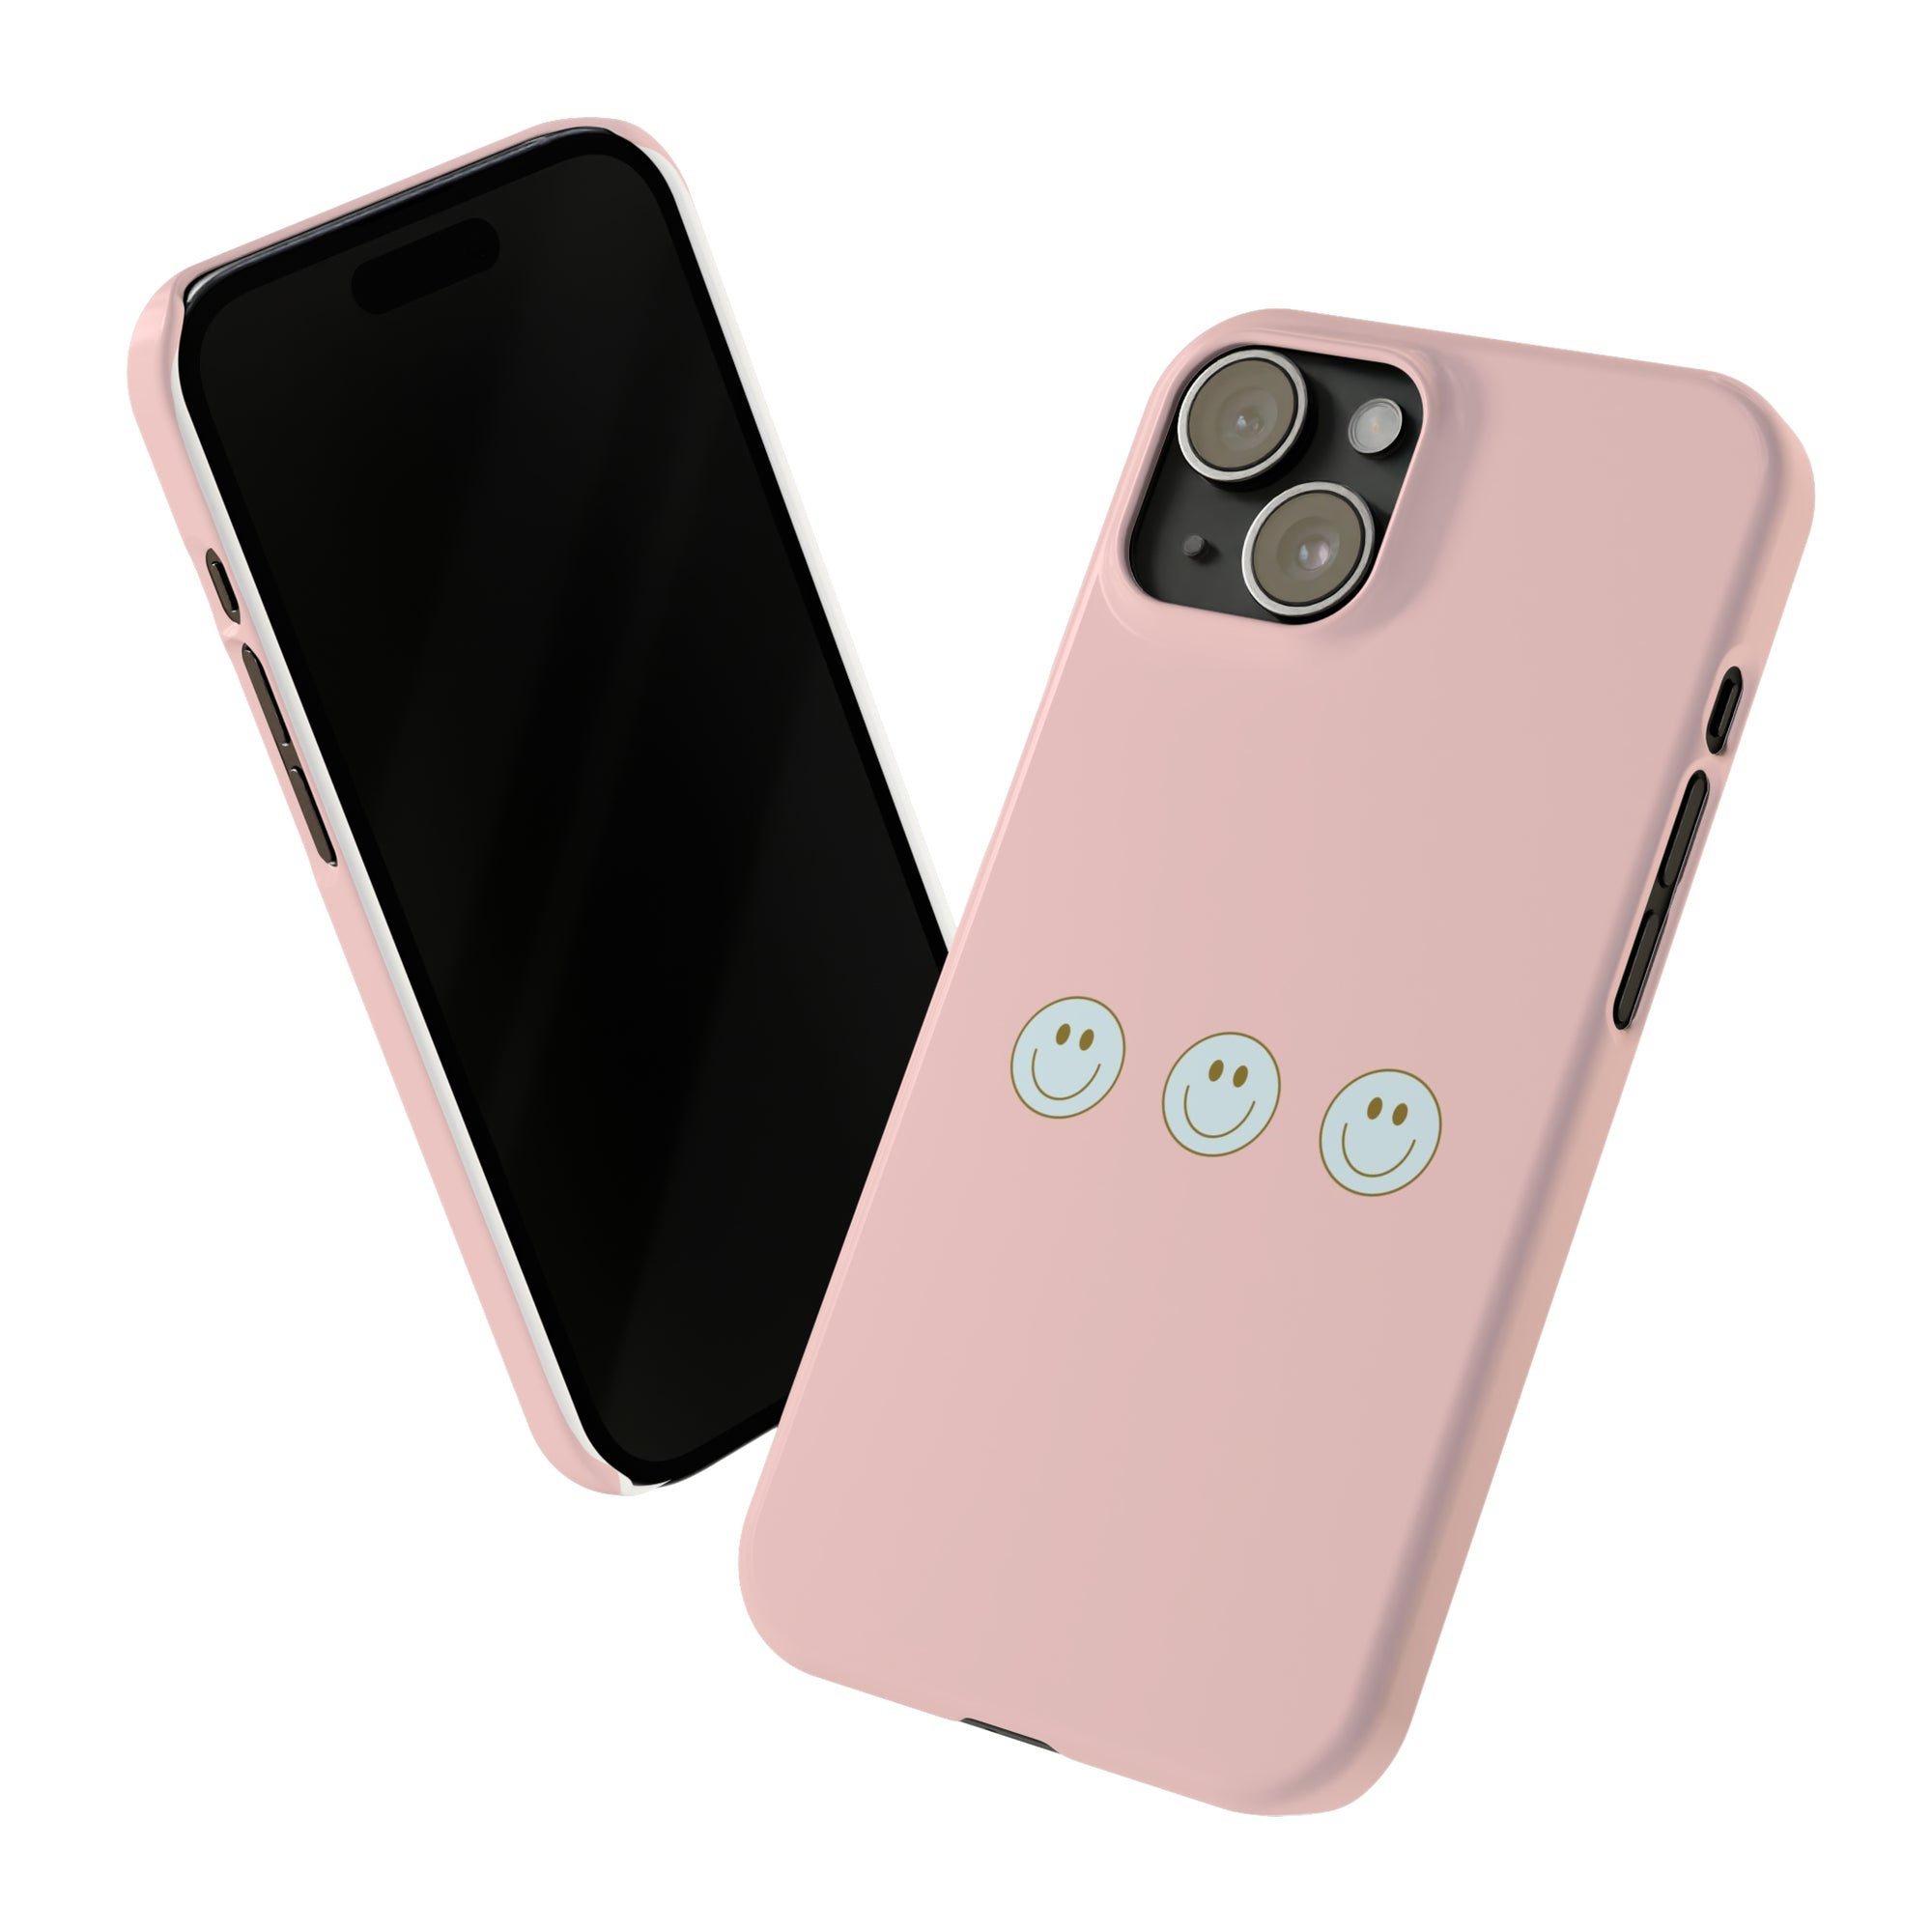 Slim Smiley Phone Case in Pink